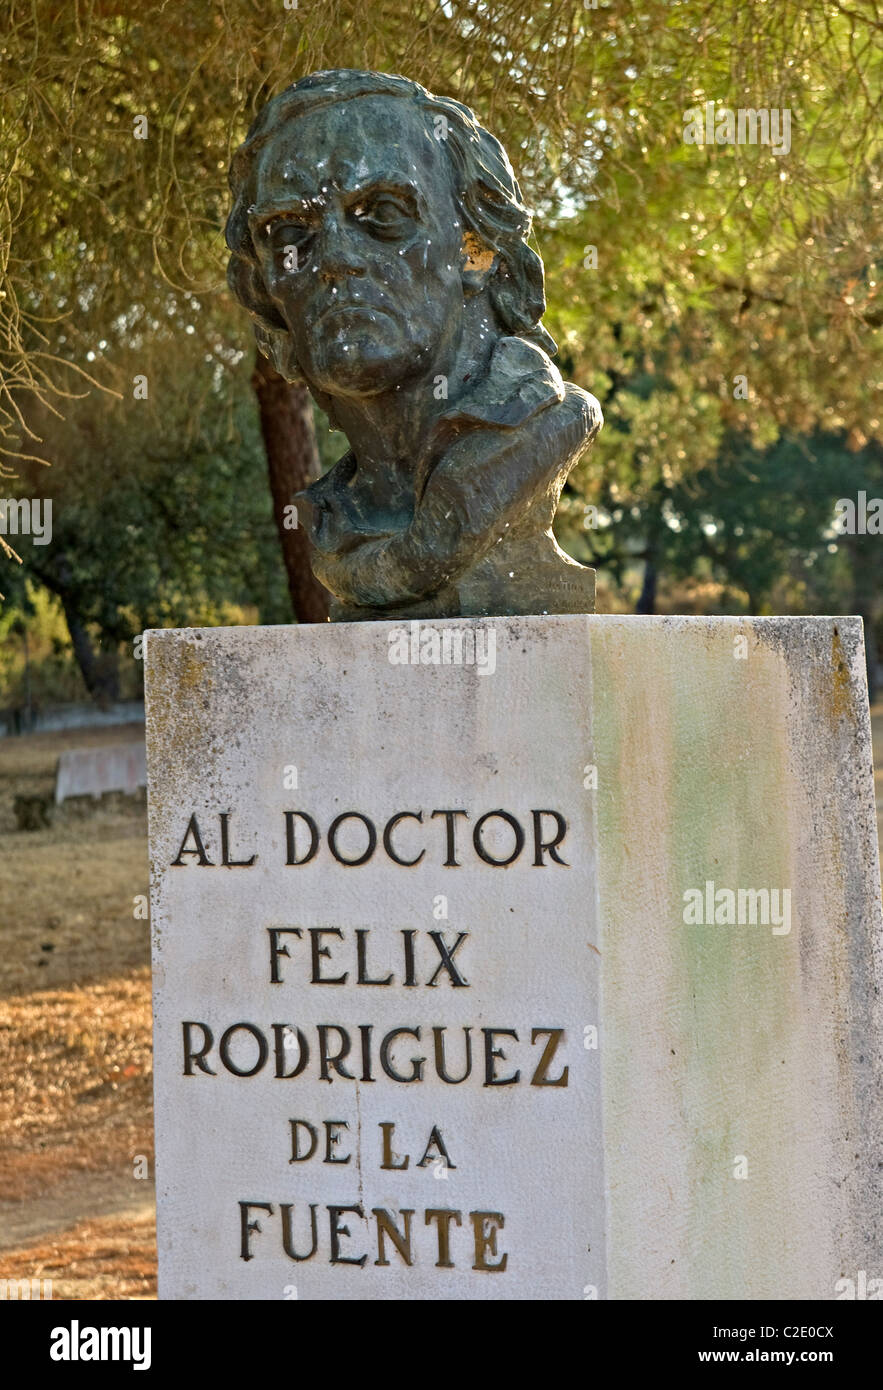 Felix Rodriguez de la Fuente statue in Acebron palace, Doñana National Park. Huelva province, Andalusia. Spain Stock Photo